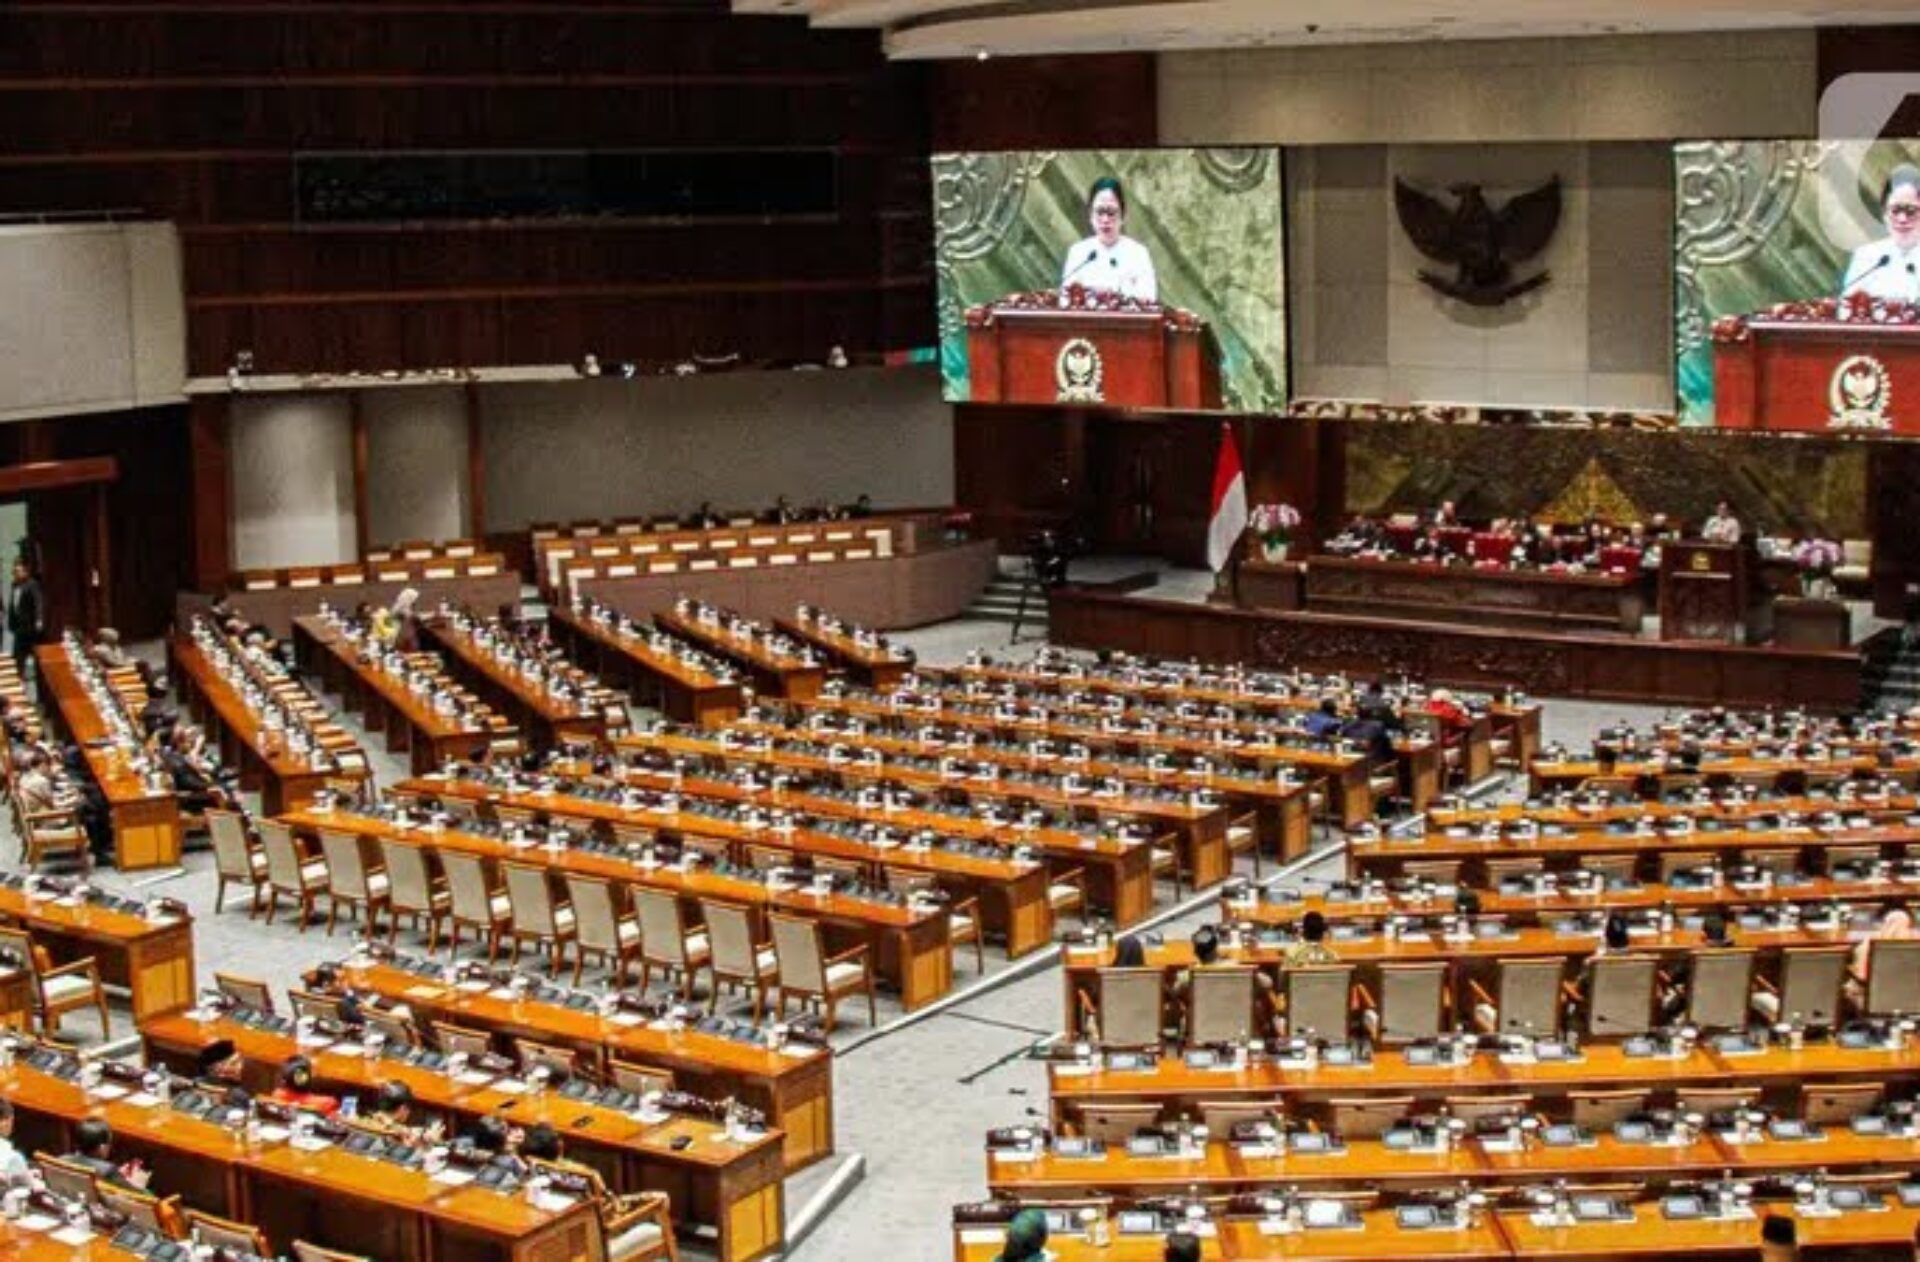 Elit Legislator Terlibat Judi, Prof Sutan Nasomal: Panggilan Tegas untuk Penegakan Hukum yang Setara